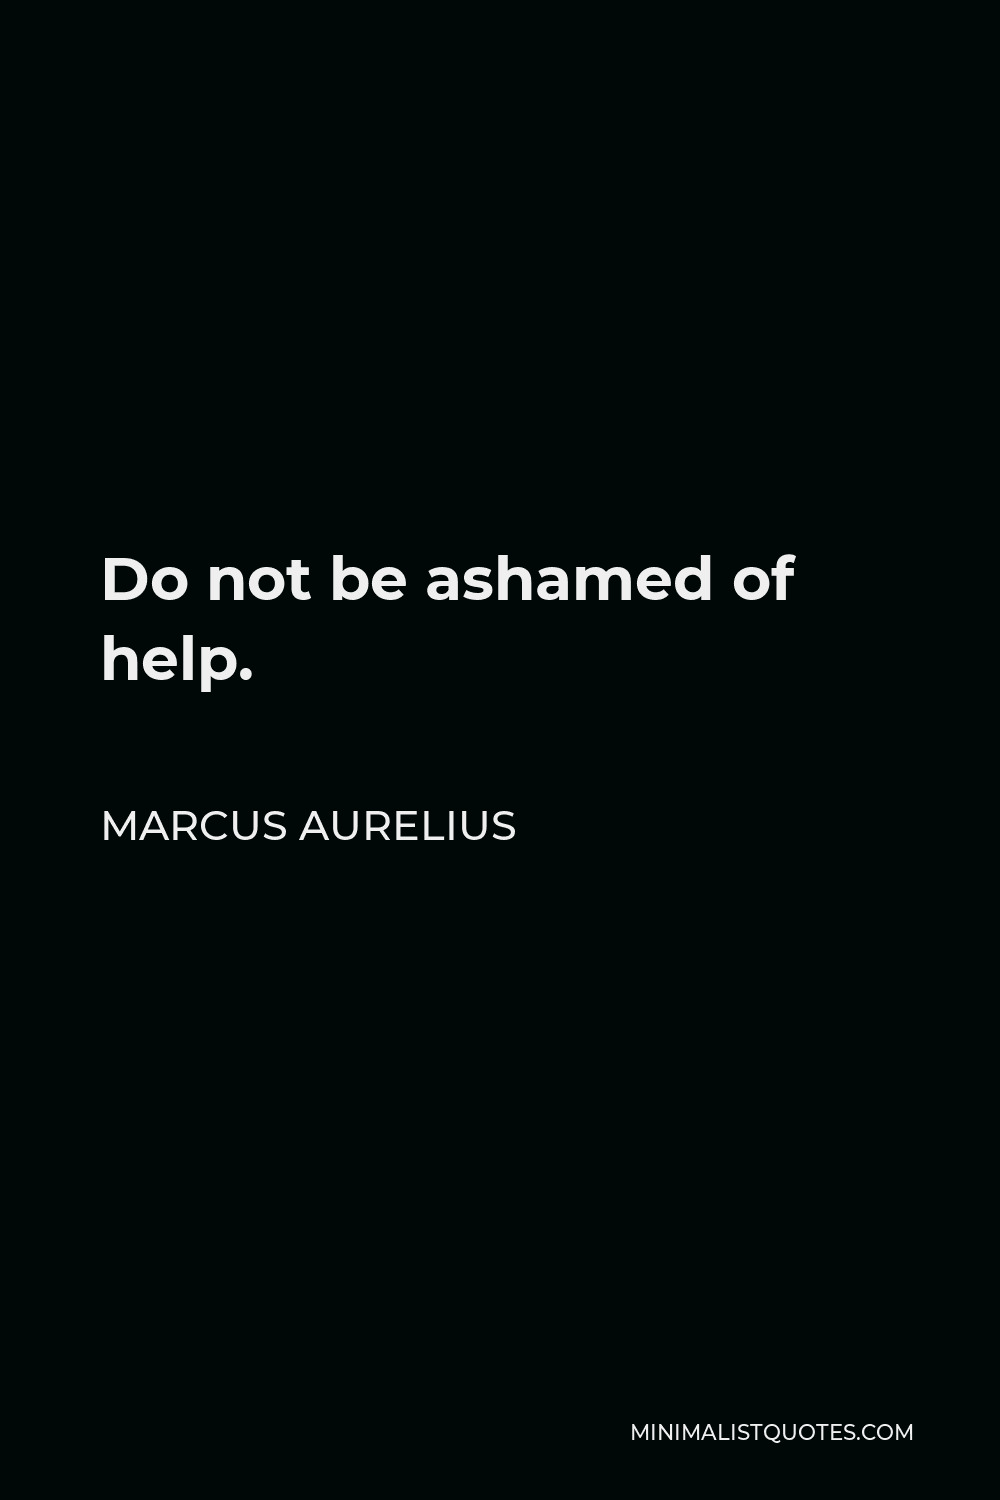 Marcus Aurelius Quote - Do not be ashamed of help.